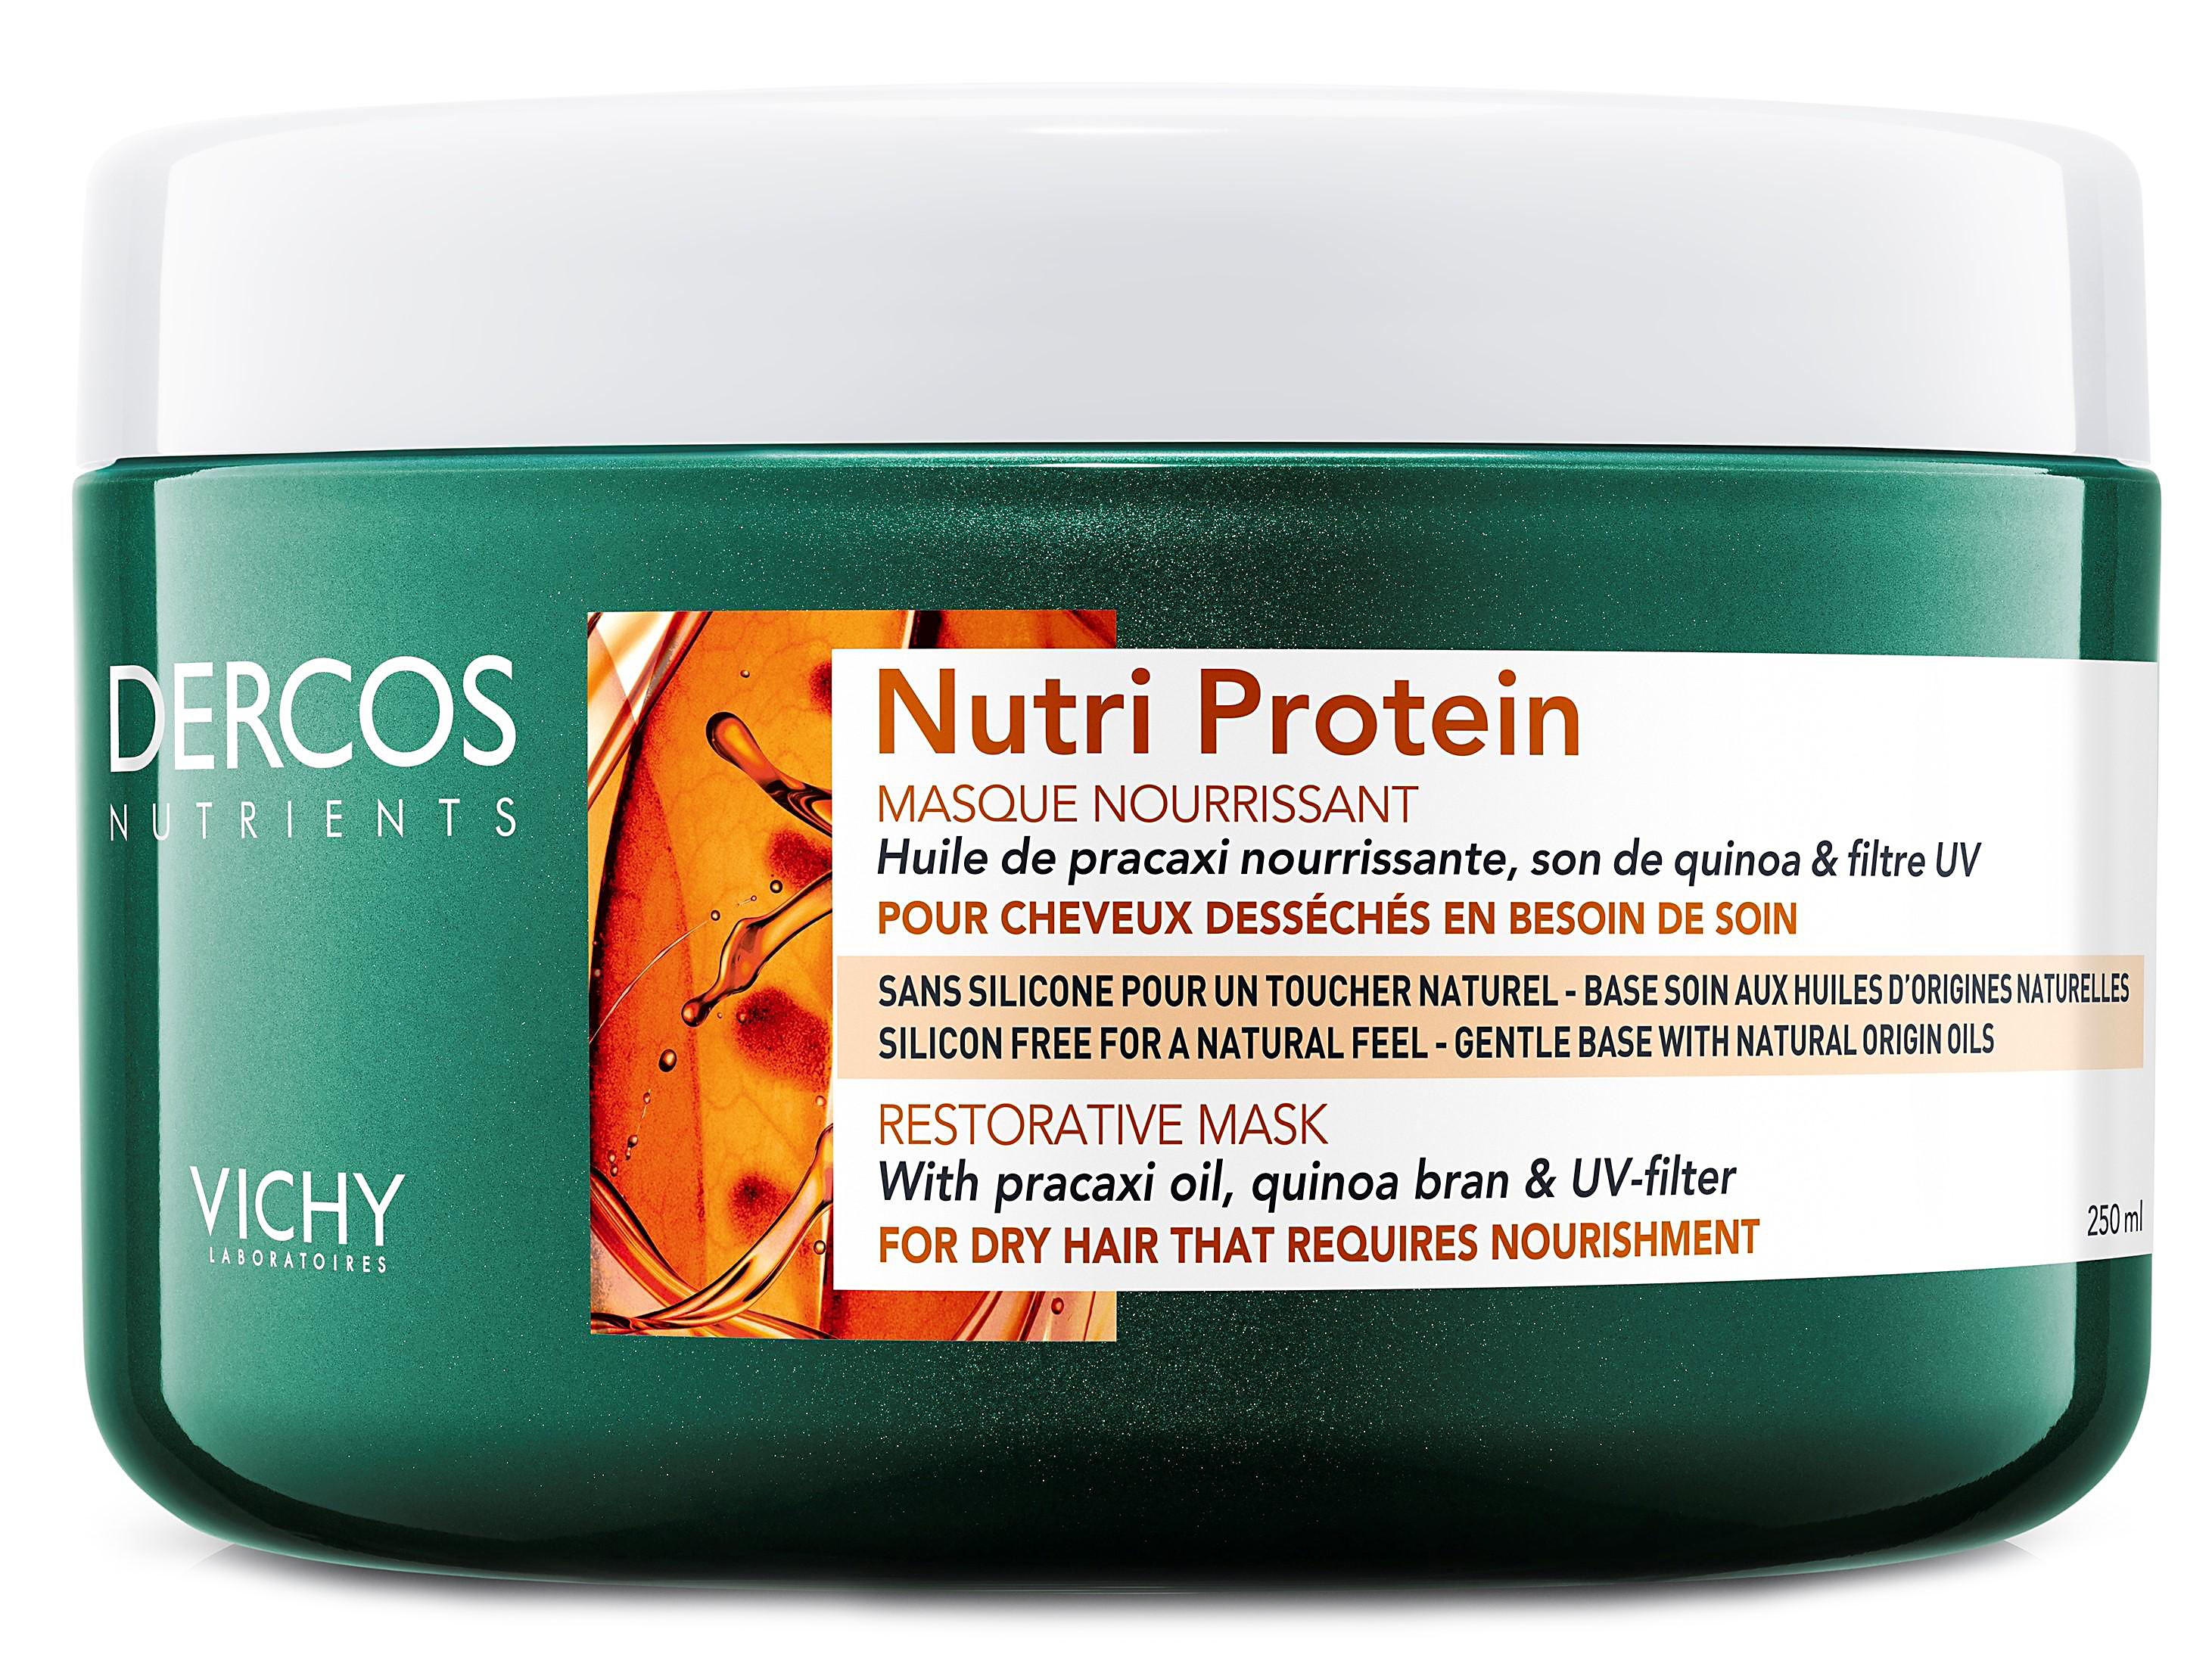 Dercos nutrients nutri protein маска восстанавливающая для секущихся и поврежденных волос 250мл Vichy (Виши)